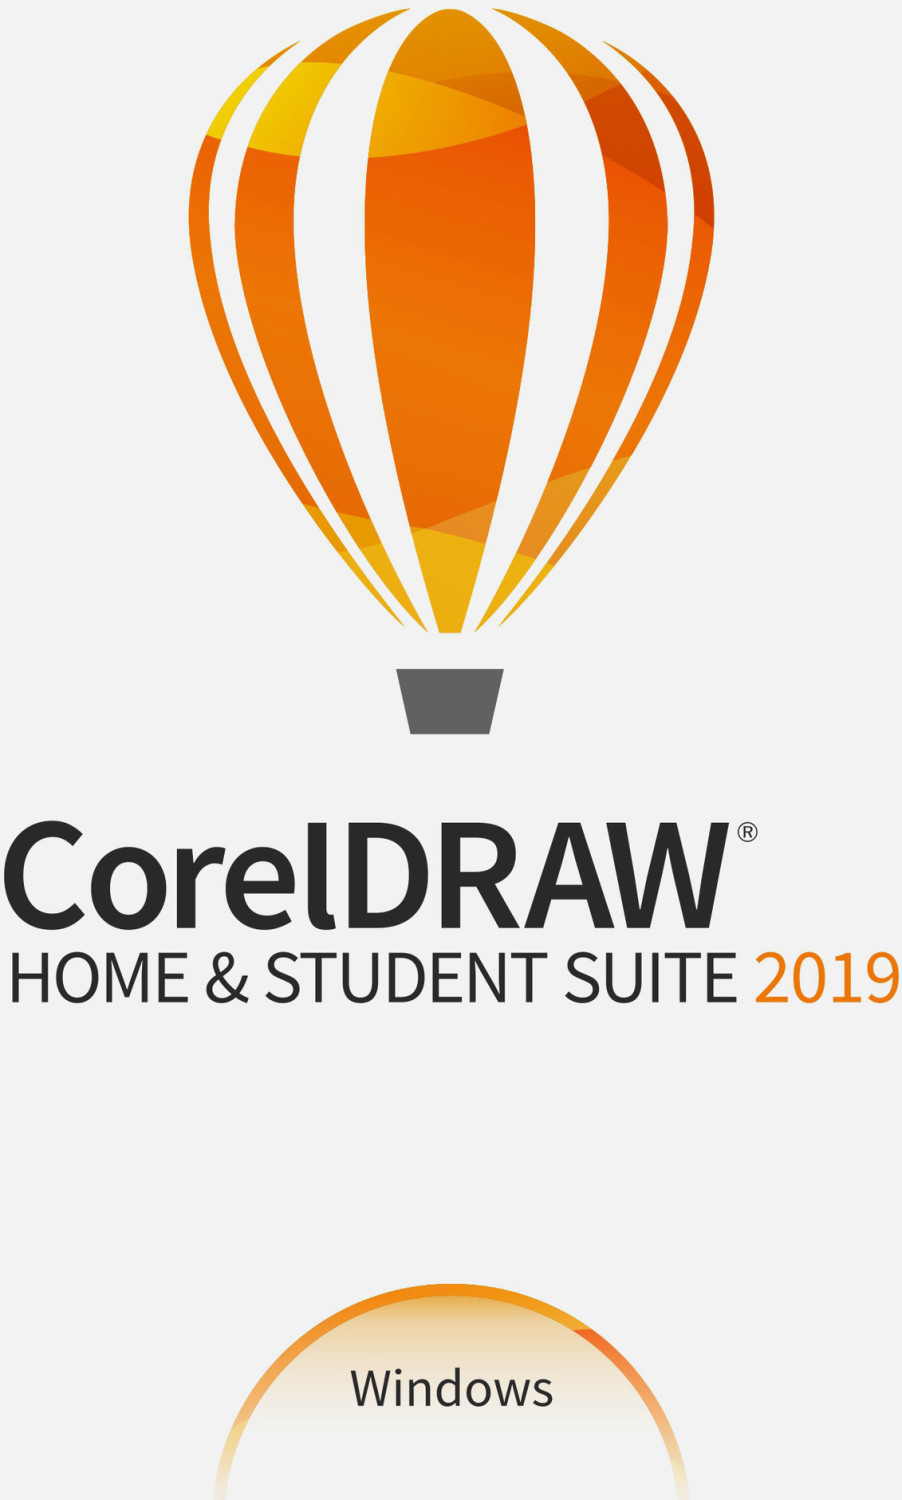 coreldraw home & student 2019 download